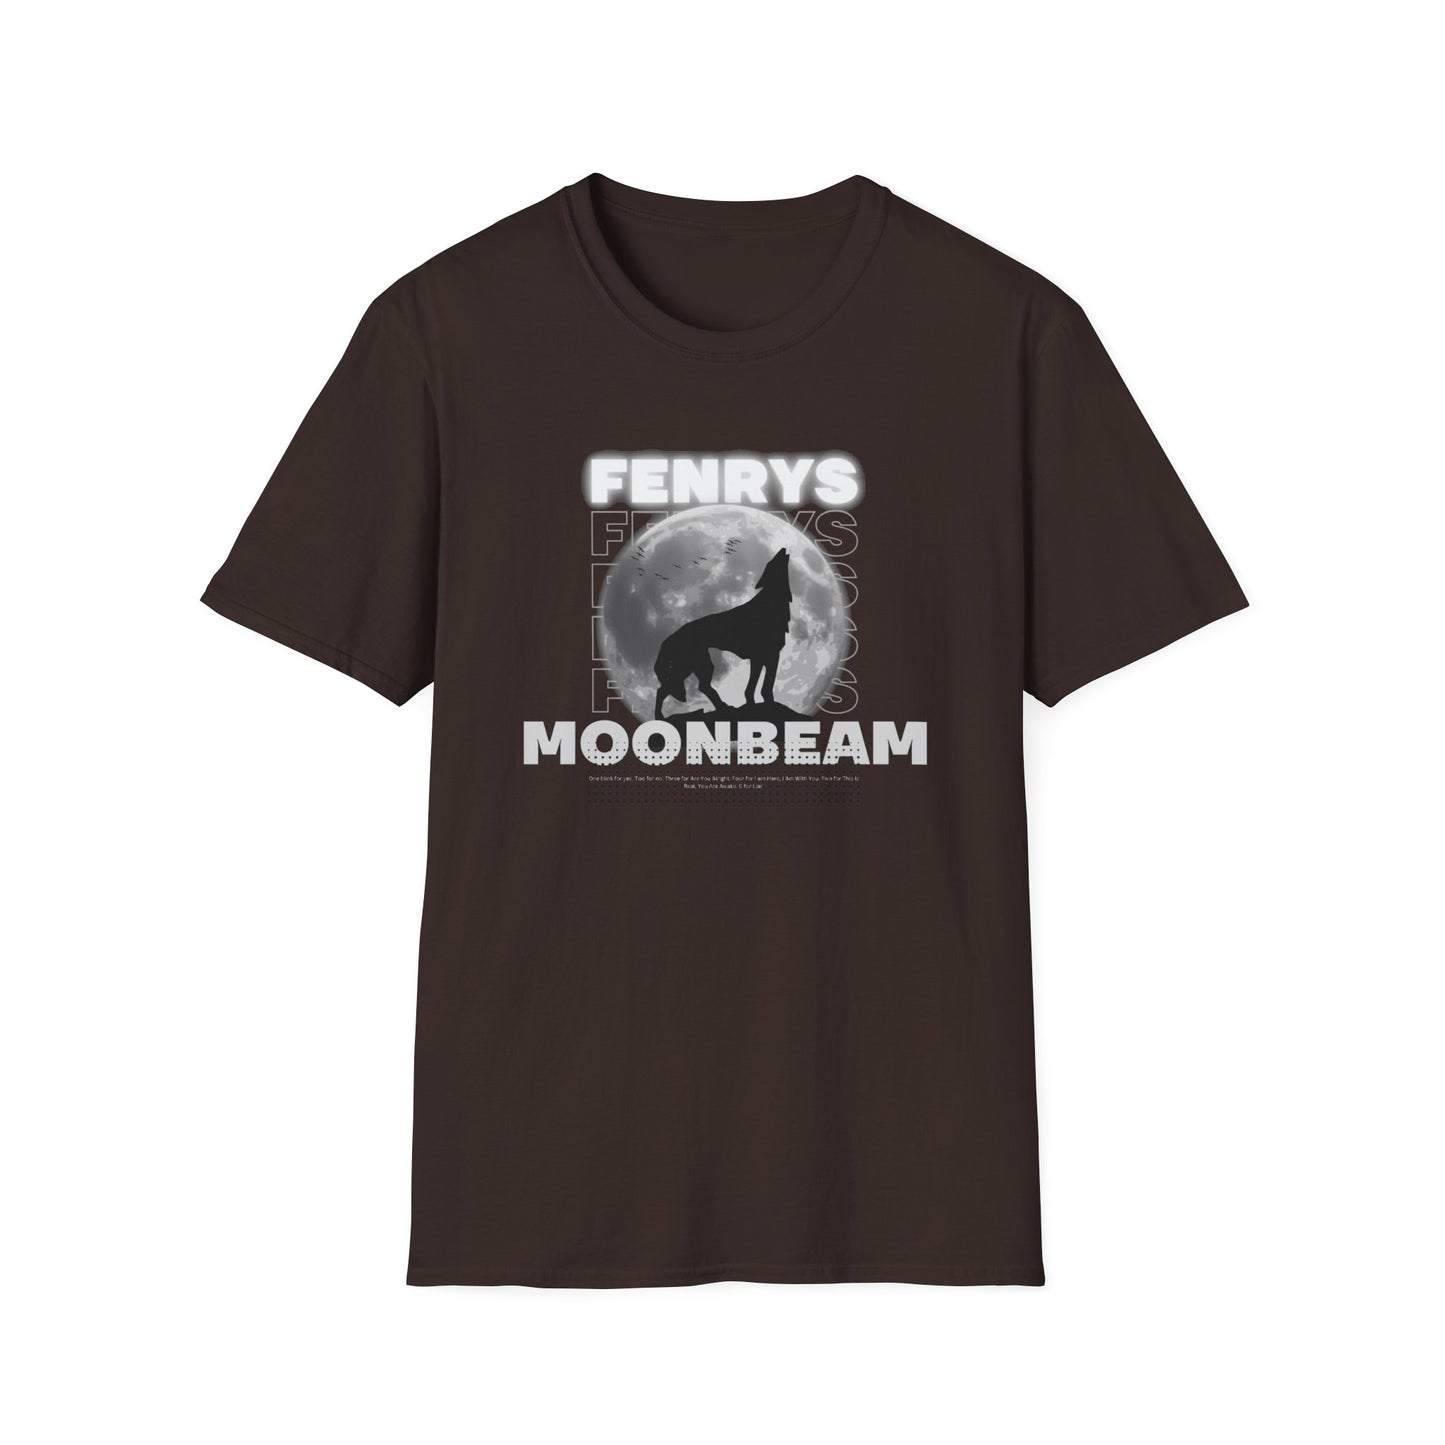 Fenrys Moonbeam T-Shirt, Throne of Glass